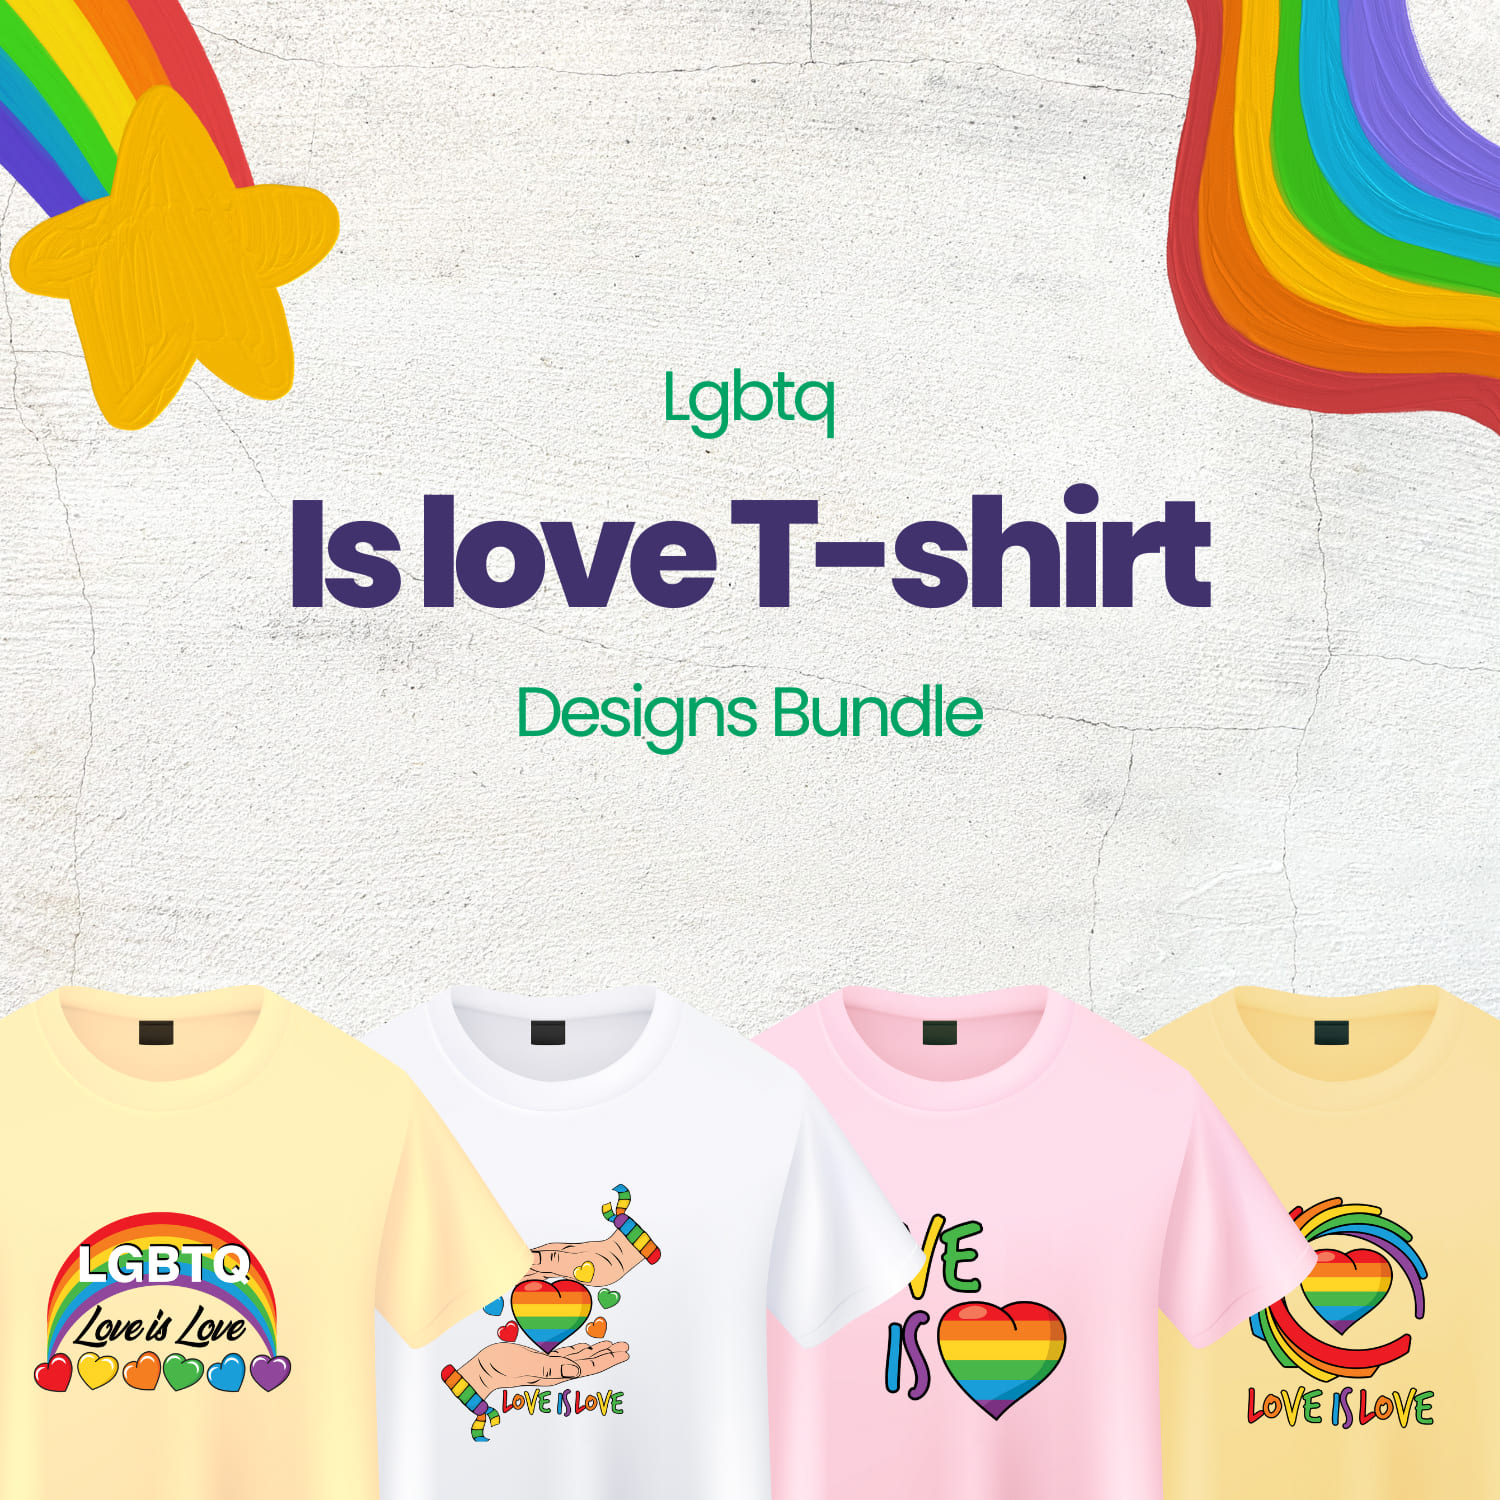 Lgbtq Love Is Love T-shirt Designs Bundle.